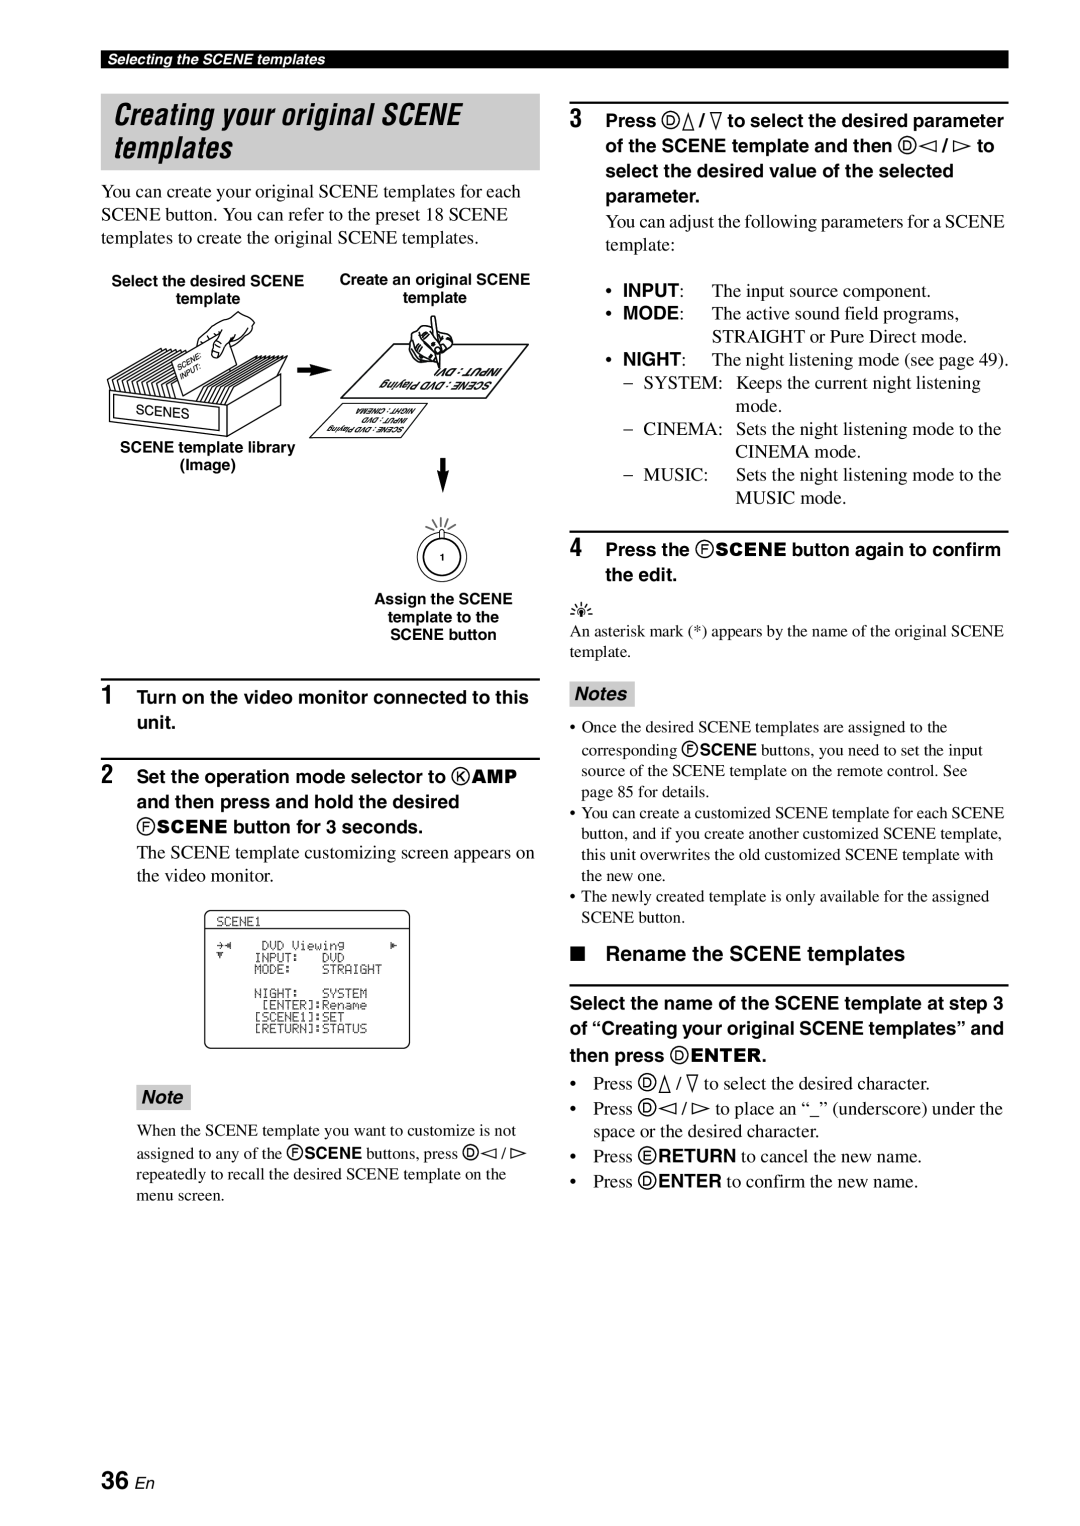 Yamaha HTR-6080 owner manual Creating your original SCENE templates, 36 En, Rename the SCENE templates, Notes 